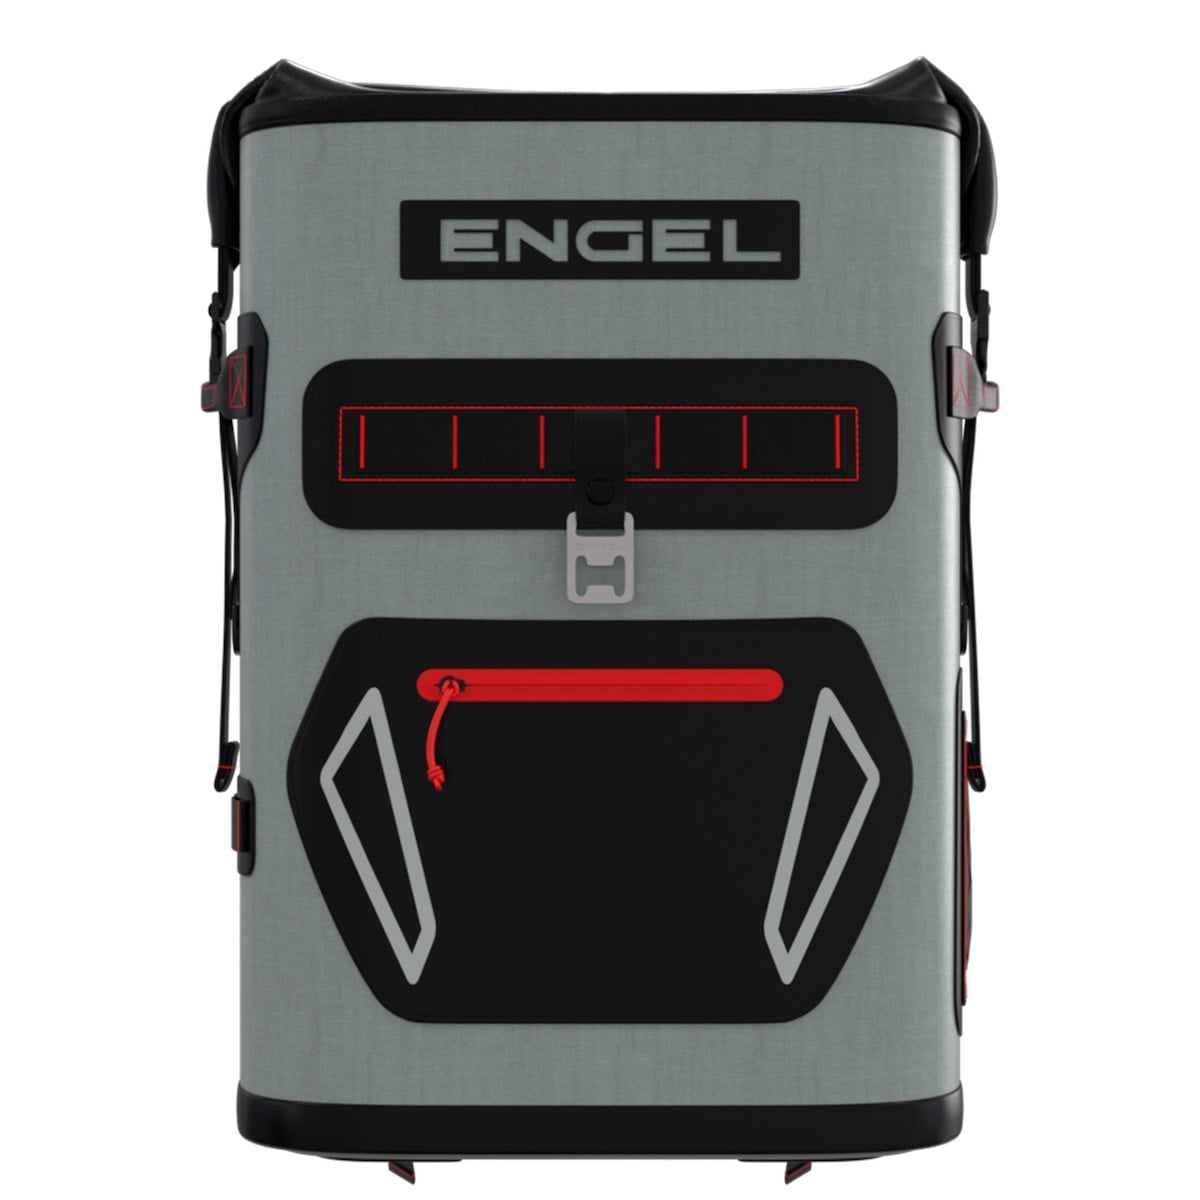 Engel BP25 High-Performance Backpack Cooler front profile.